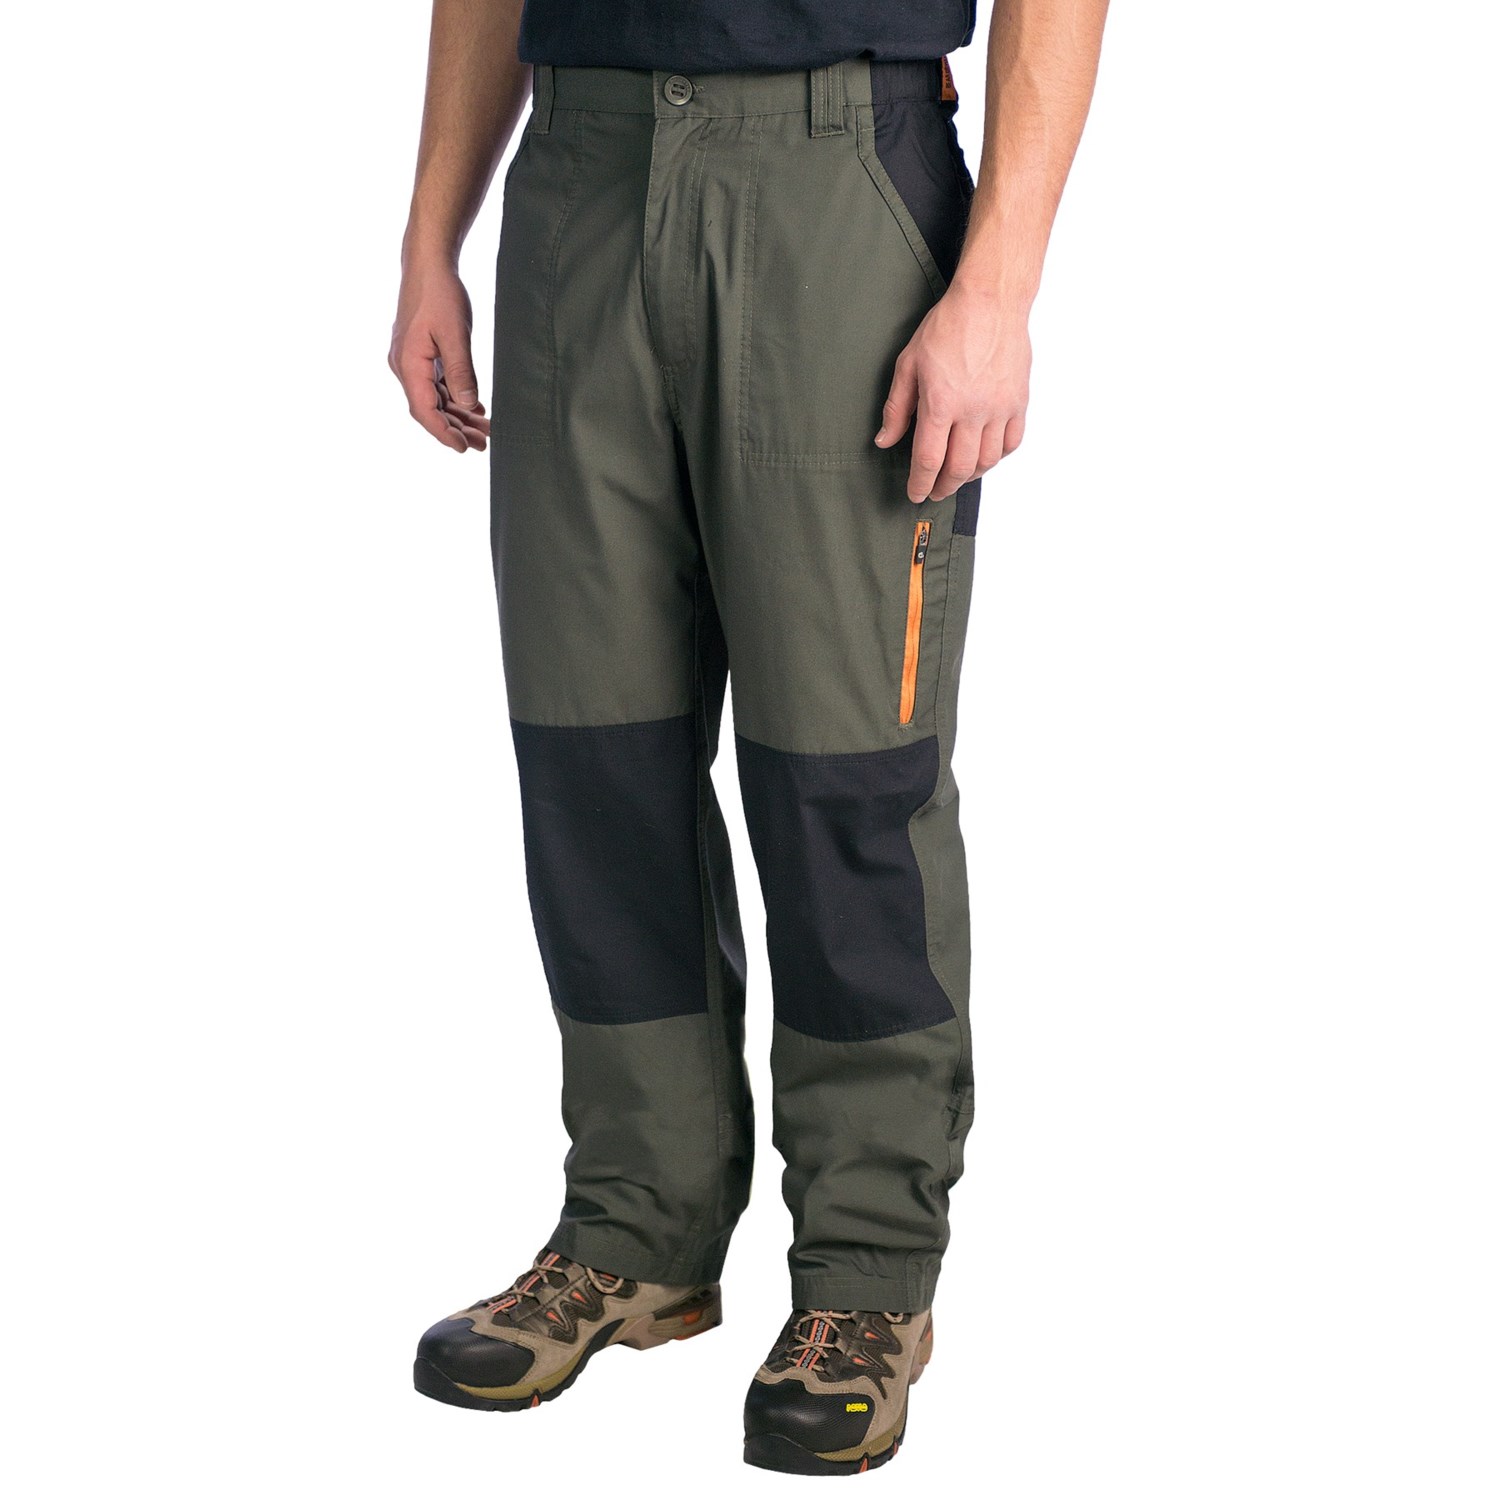 Craghoppers Bear Grylls Original Trouser Pants (For Men) 8357Y - Save 31%